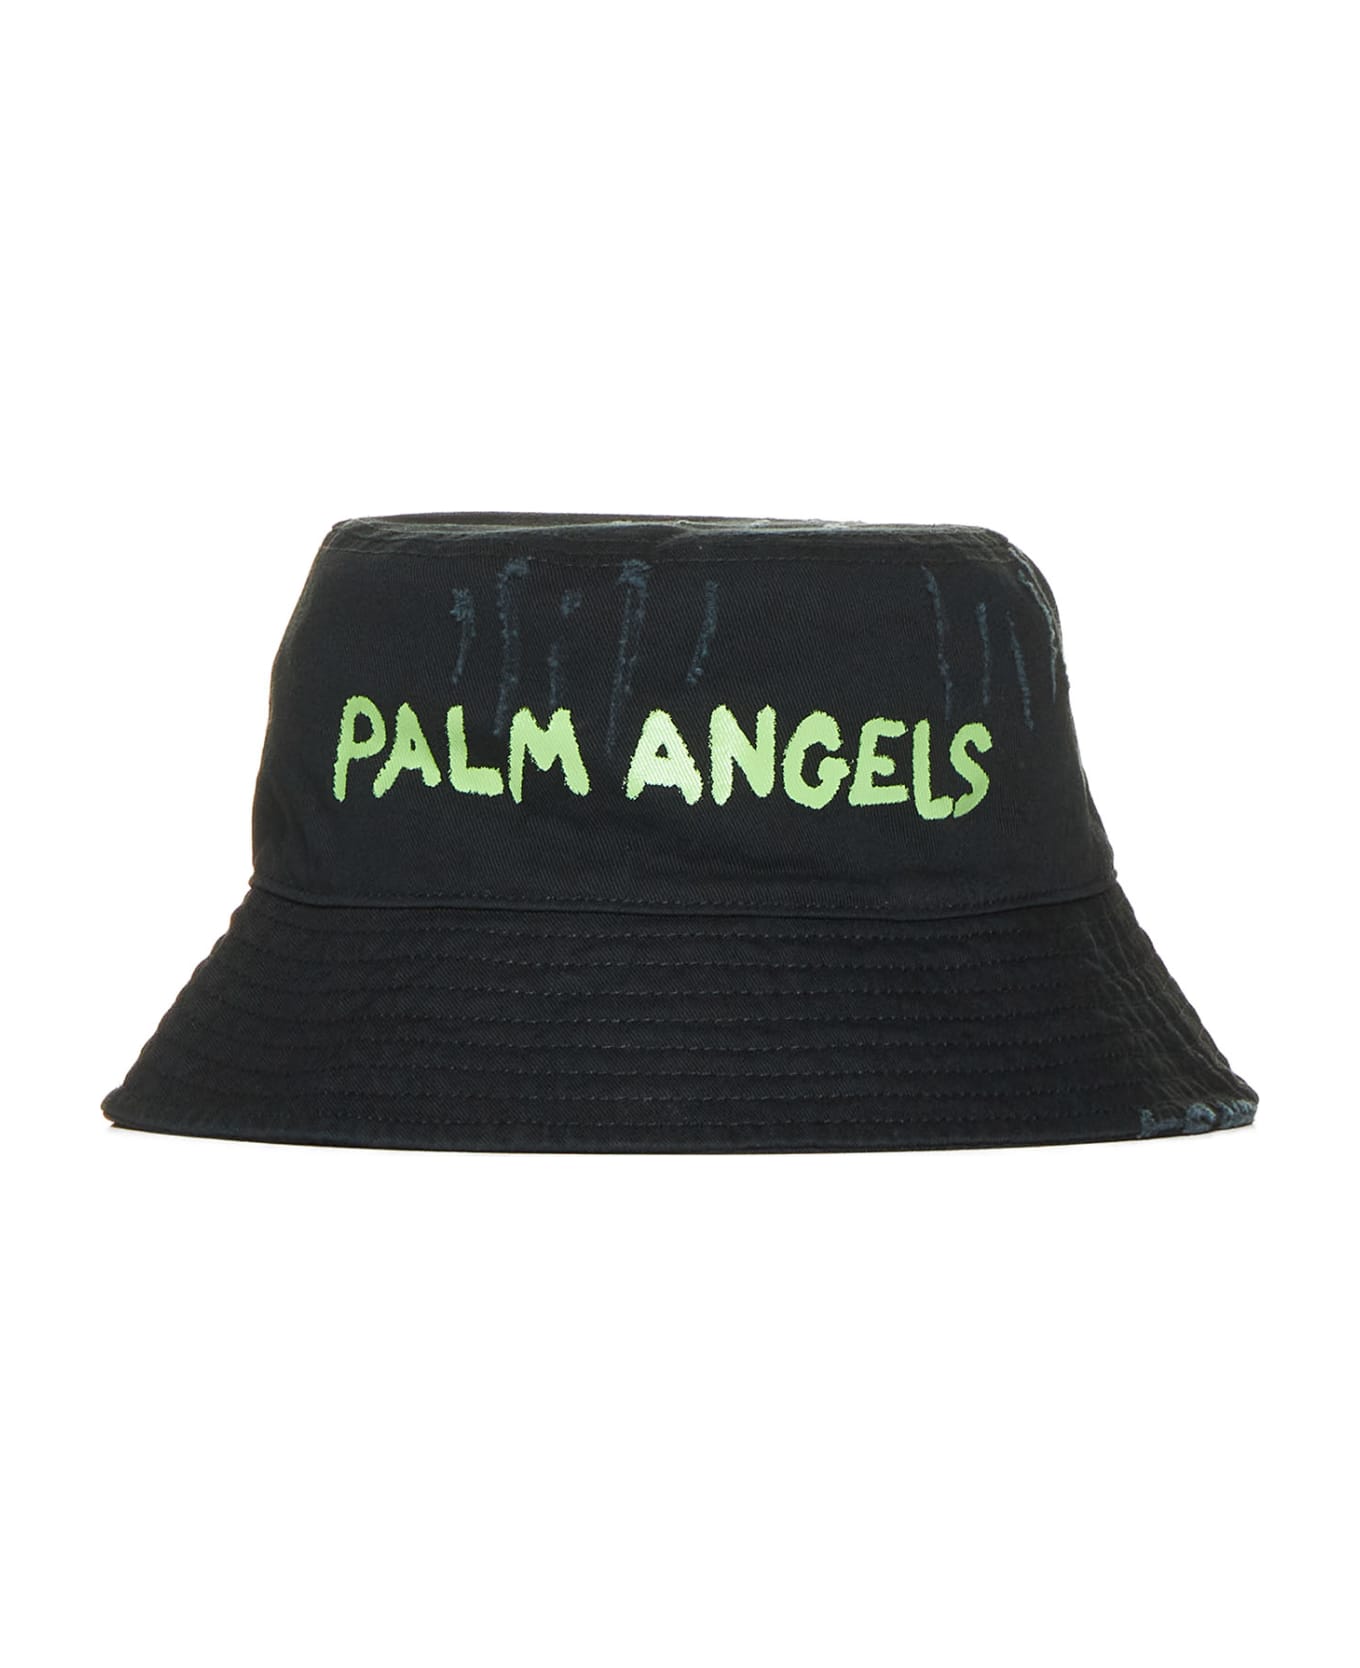 Palm Angels Logo Printed Distressed Bucket Hat - Black green fl